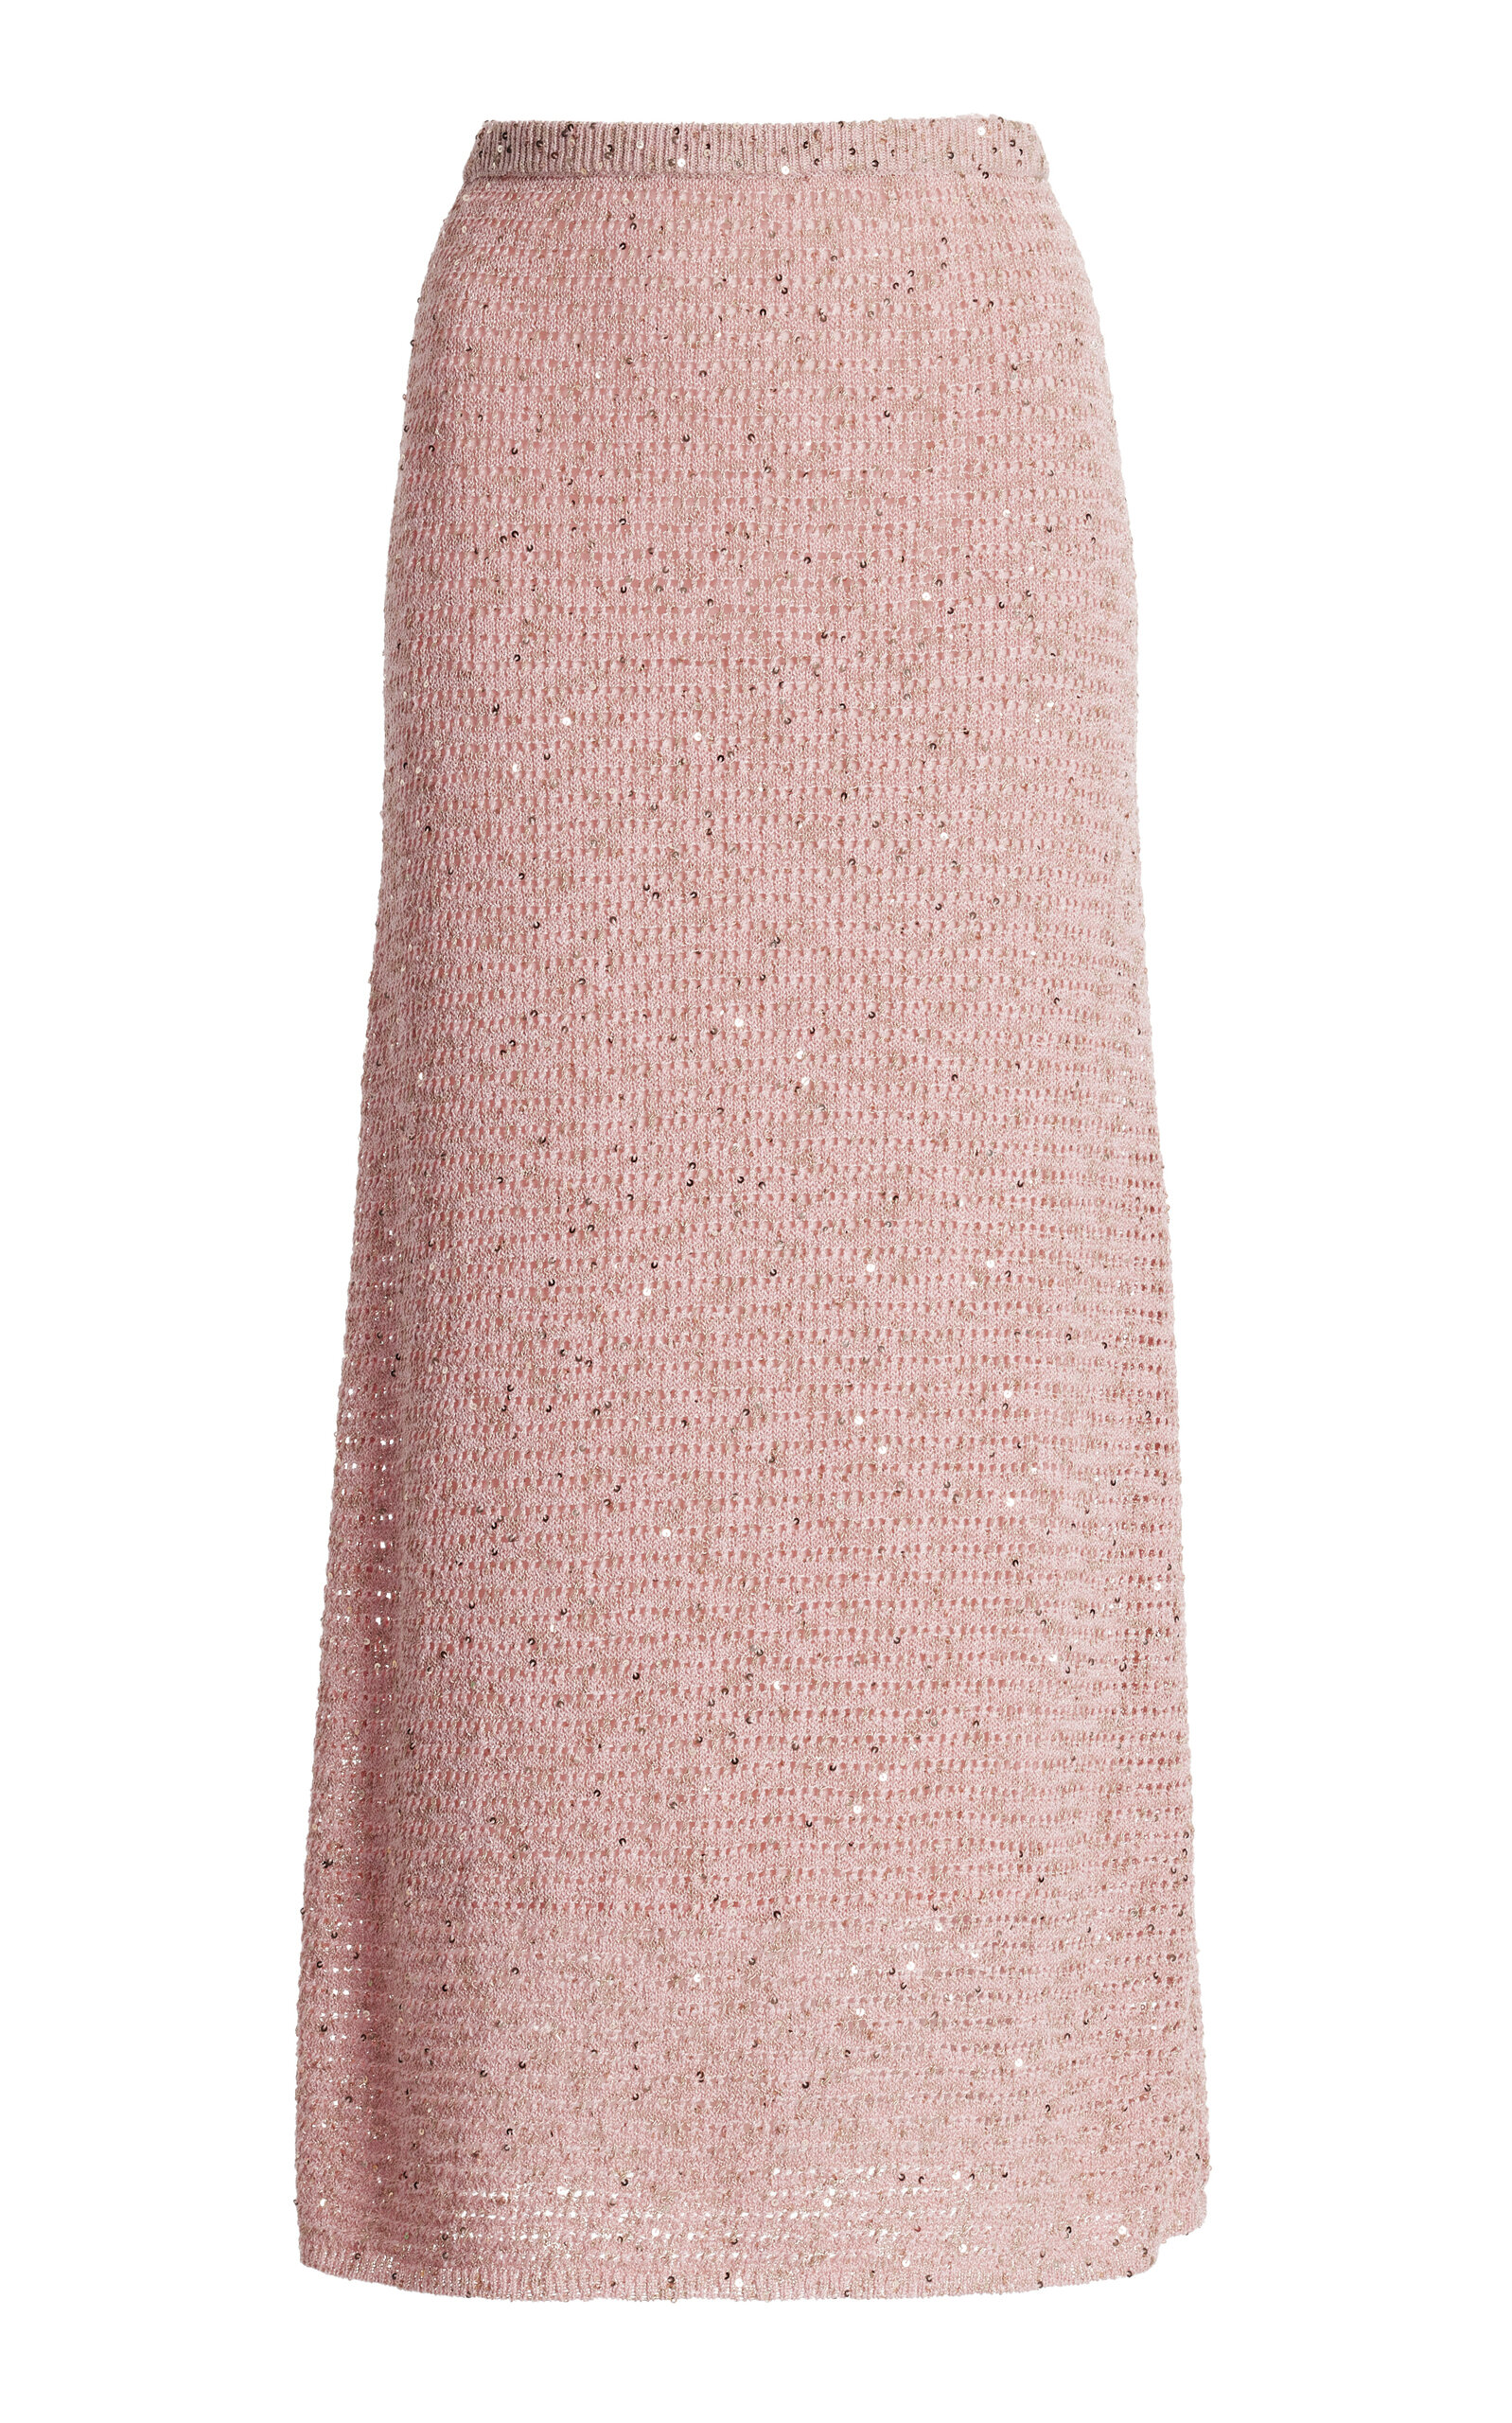 Carolina Herrera - Embellished Knit Cotton-Blend Midi Skirt - Pink - L - Moda Operandi